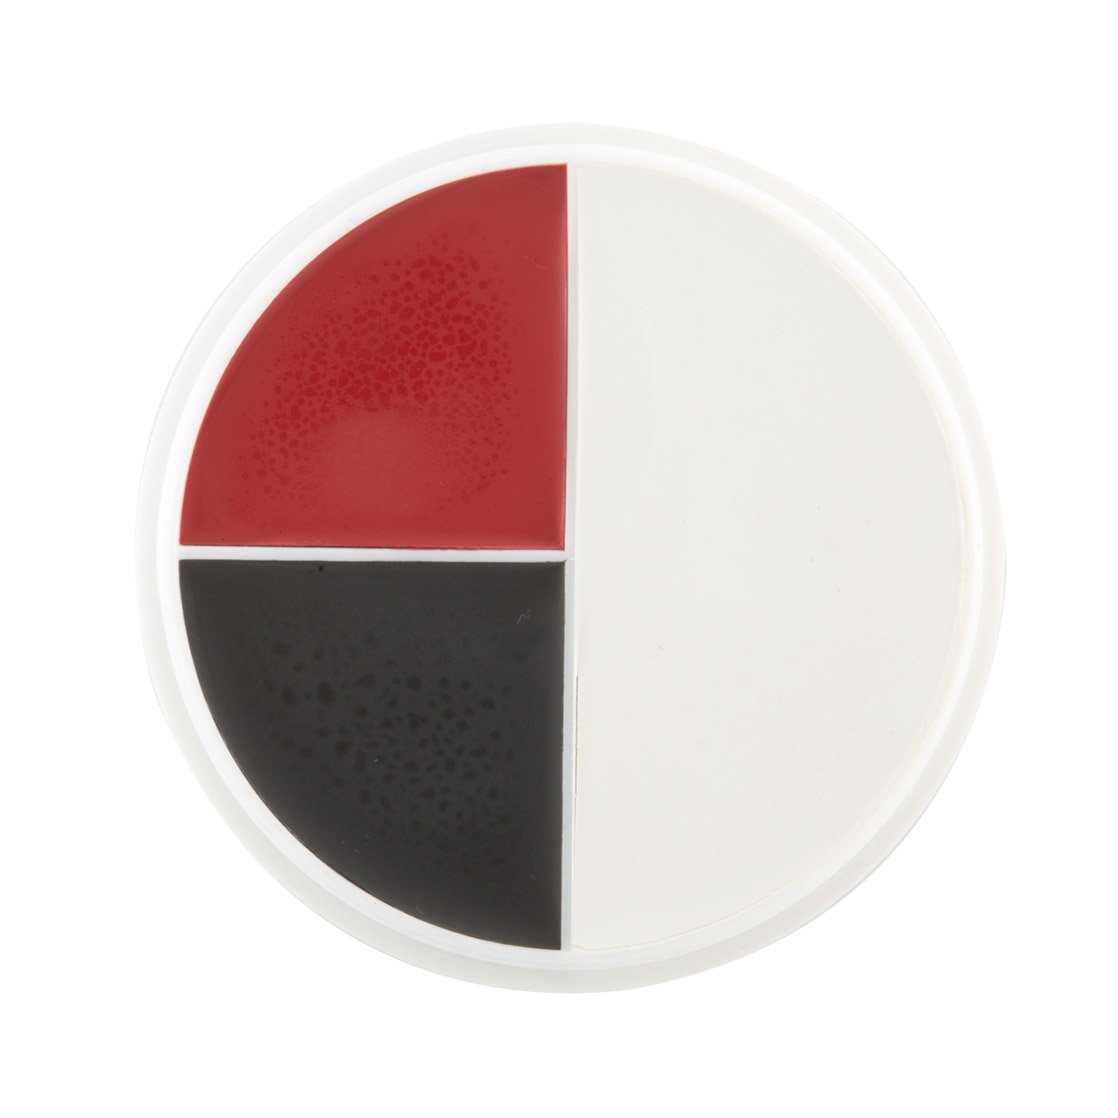 Red, Black & white wheel .5 oz /14g